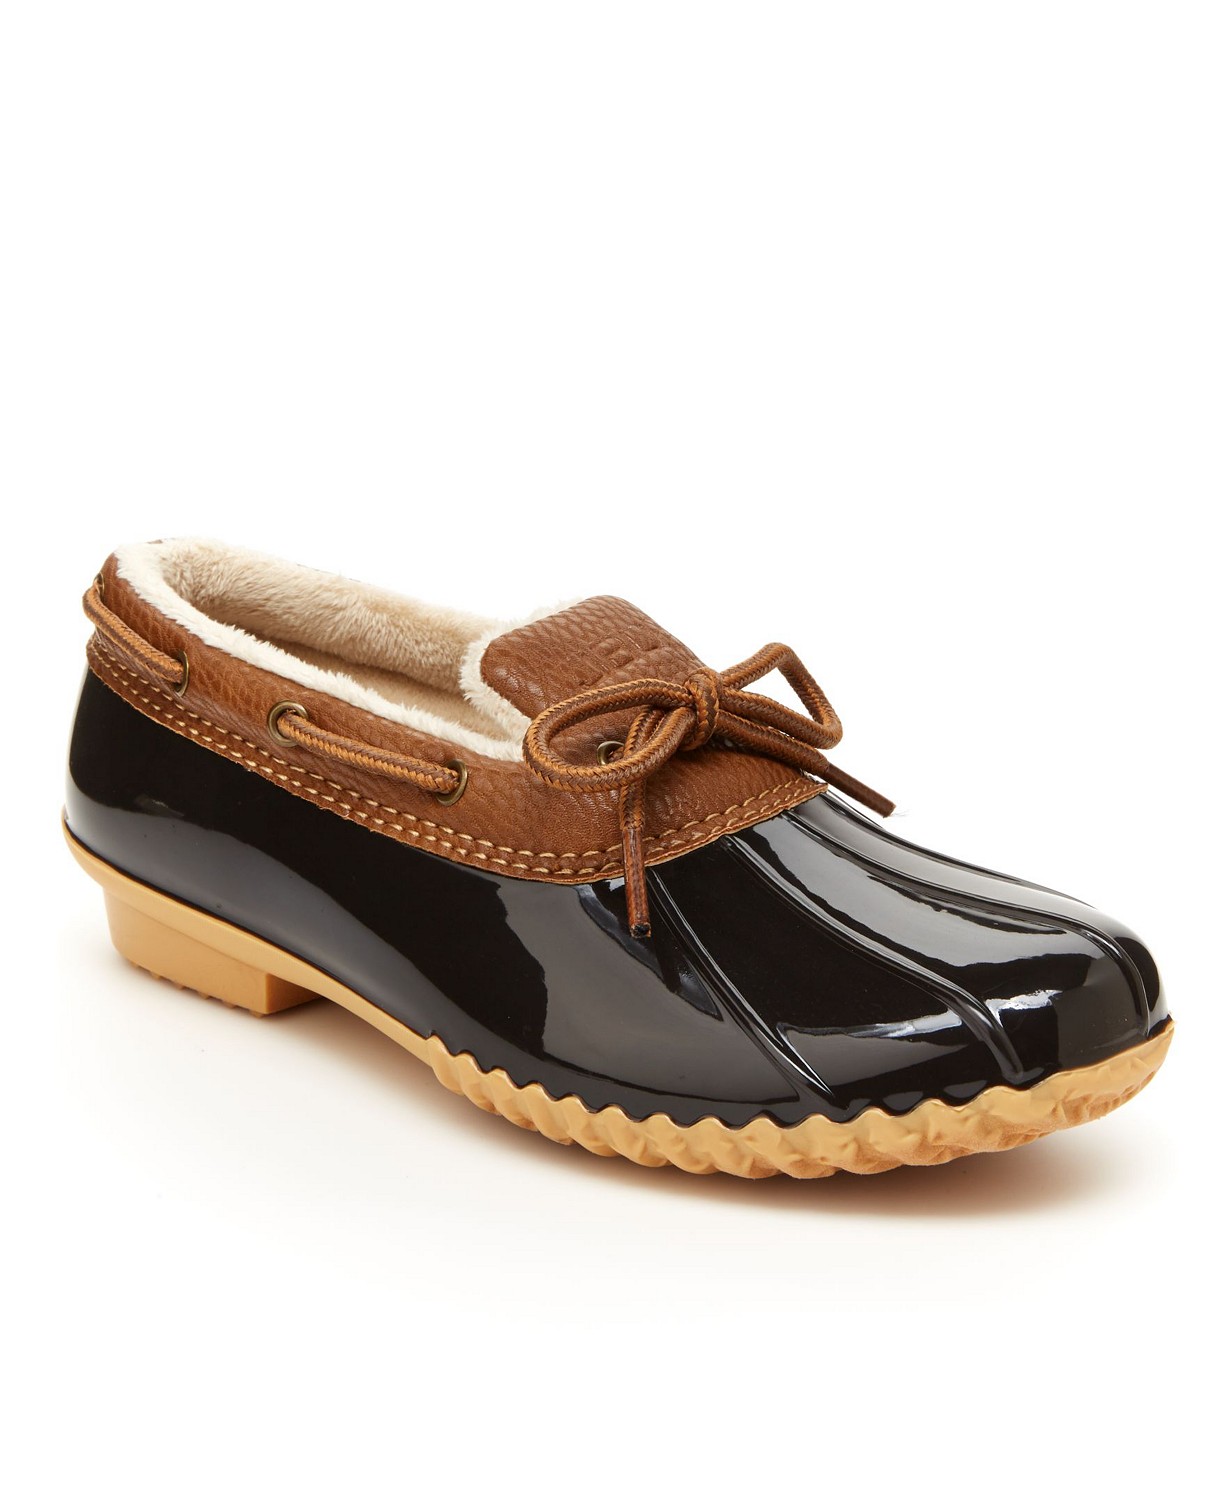 (67% OFF Deal) Woodbury Women’s Casual Duck Shoe $19.99